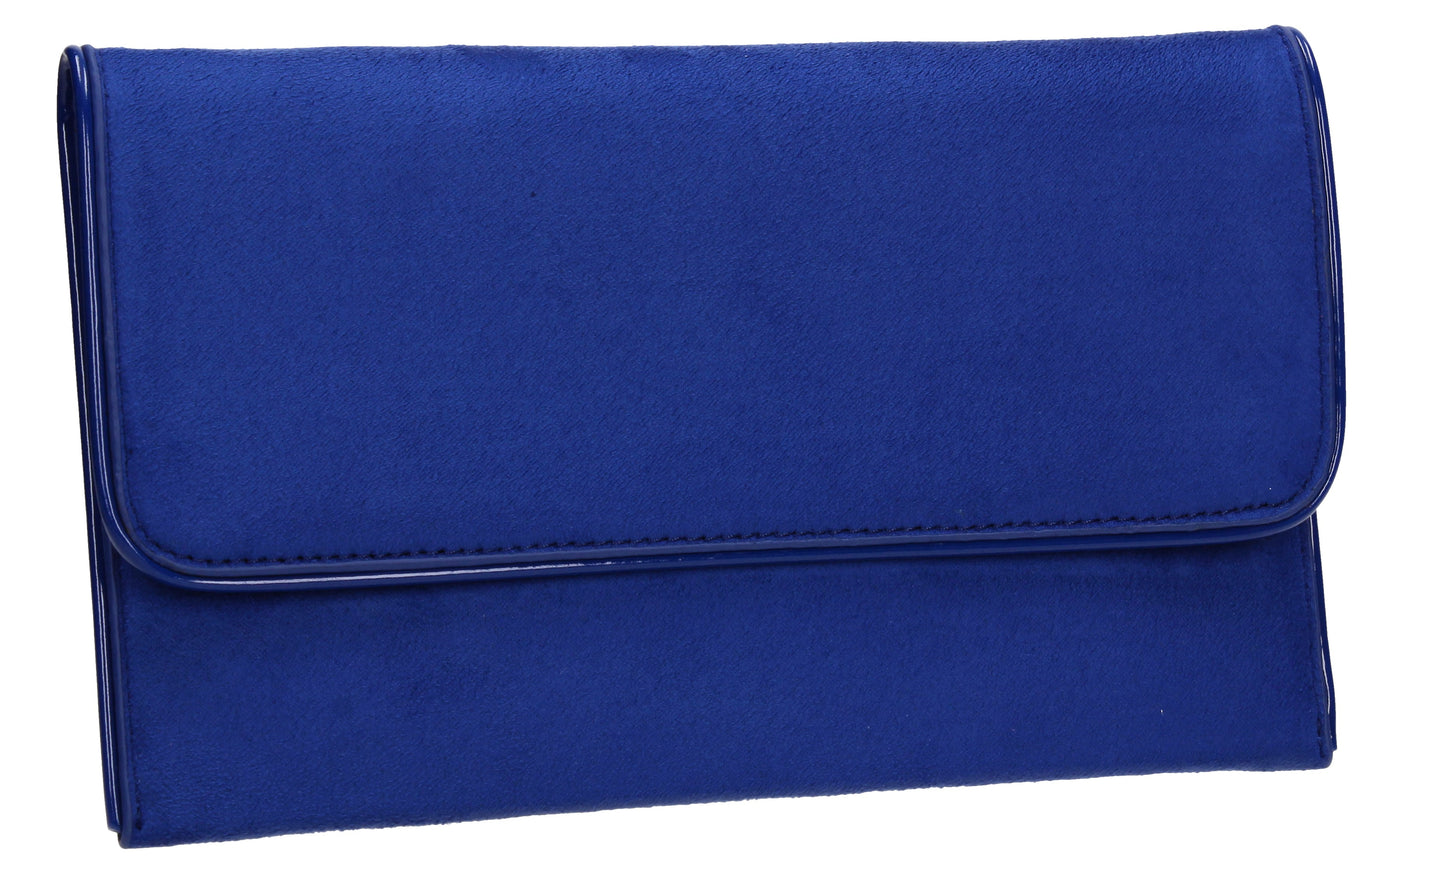 SWANKYSWANS Kora Clutch Bag Royal Blue Cute Cheap Clutch Bag For Weddings School and Work